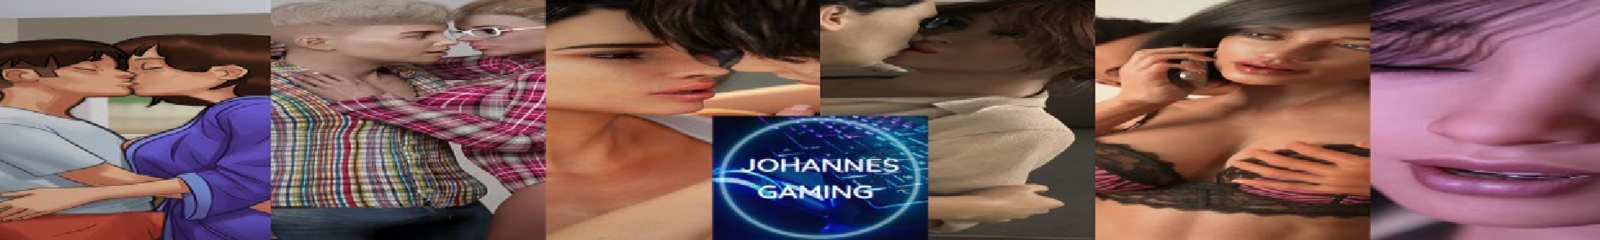 Johannes Gaming